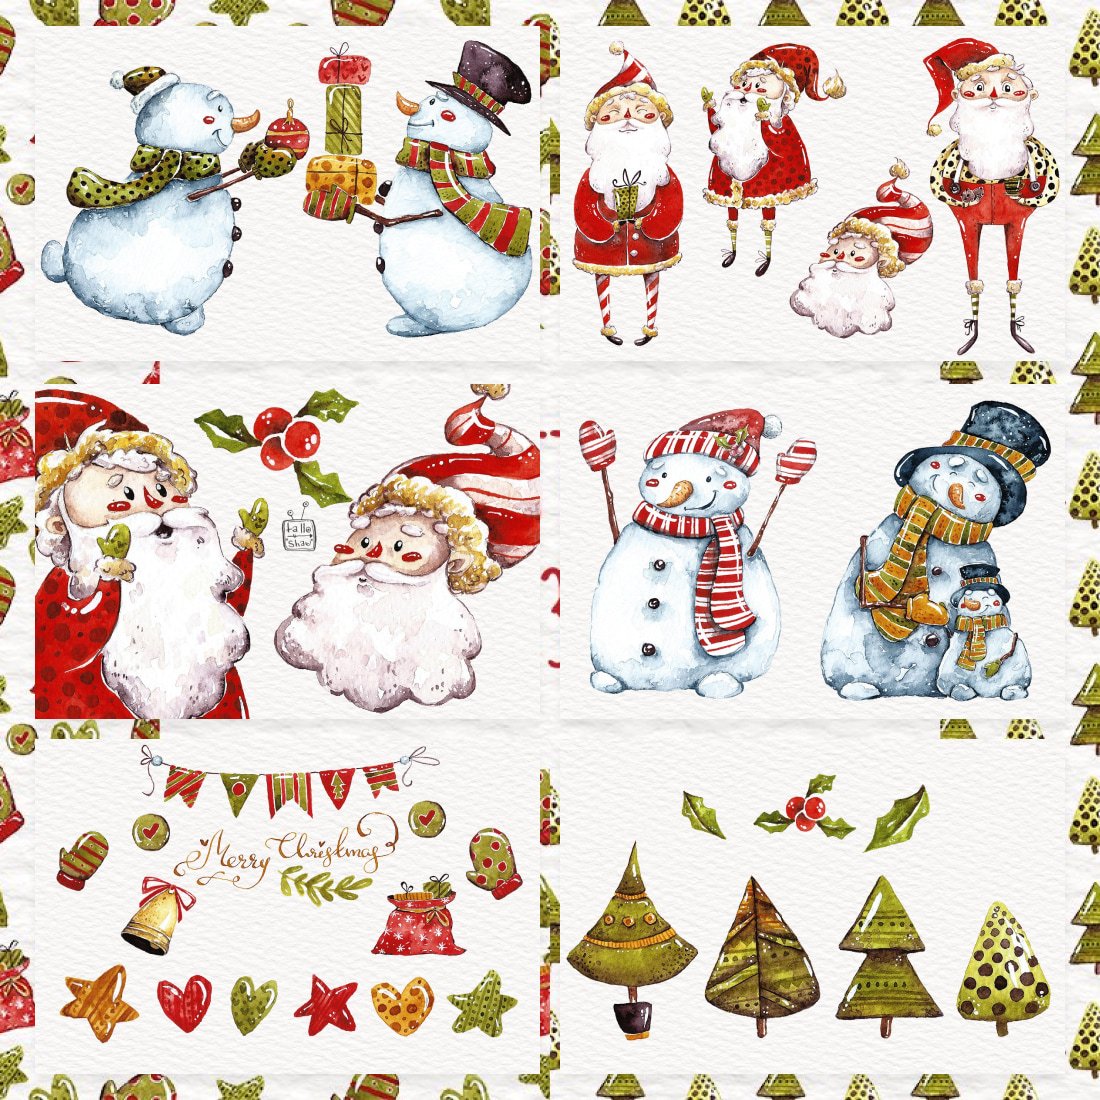 Watercolor Santas and Snowmen cover image.